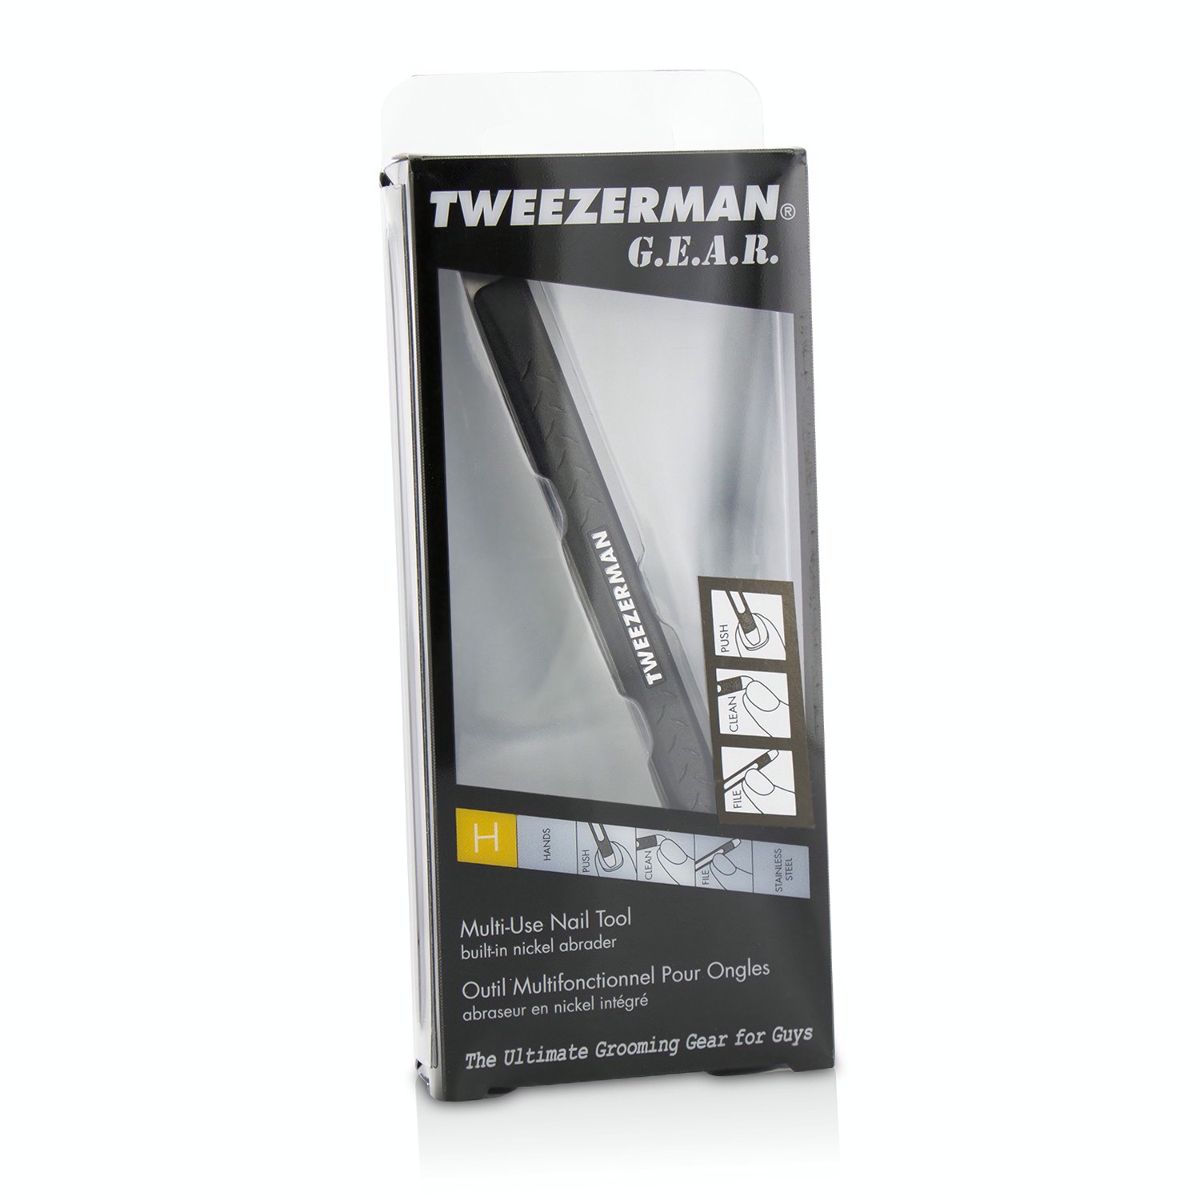 G.E.A.R. Multi-Use Nail Tool Tweezerman Image